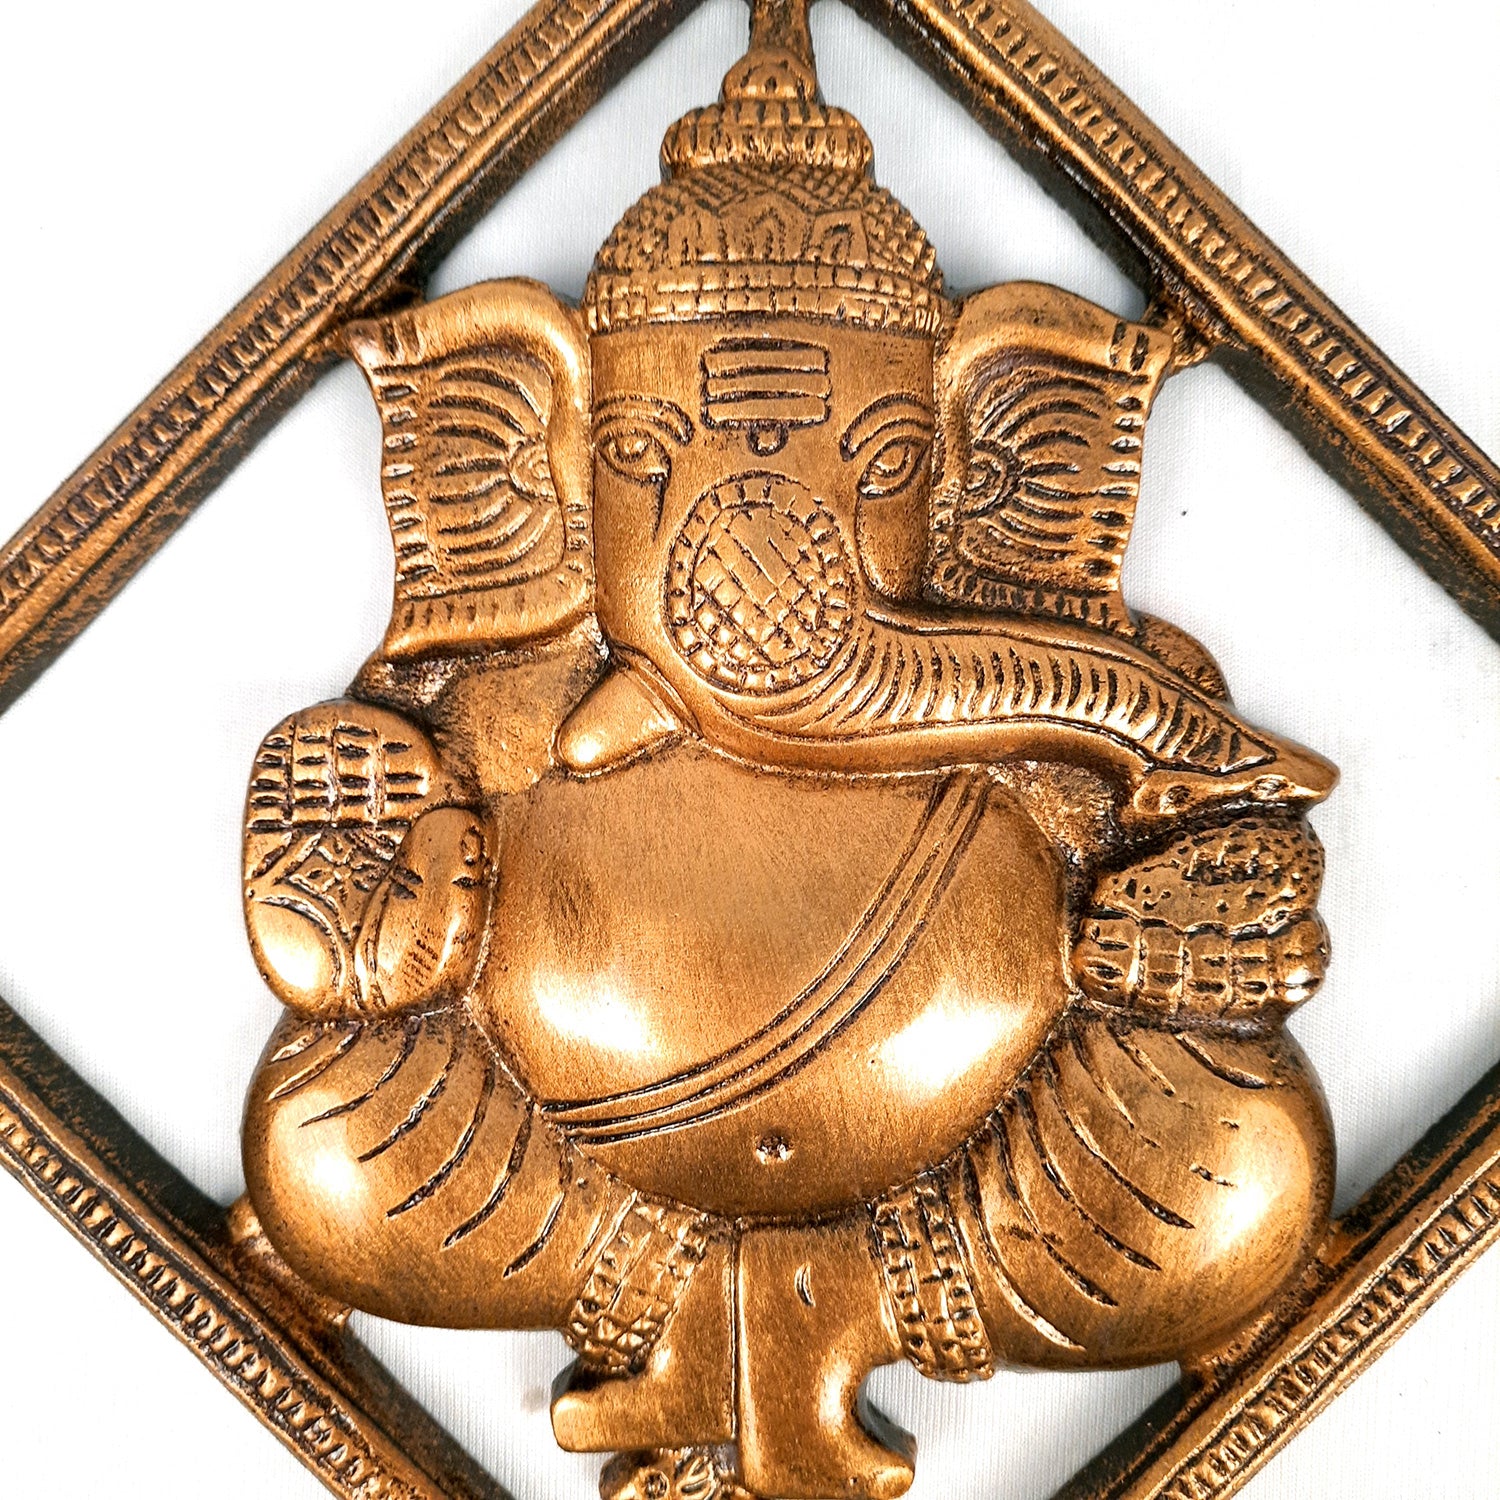 Ganesh Wall Hanging Idol | Lord Ganesha Wall Statue Decor |Religoius & Spiritual Wall Art - For Puja, Home & Entrance Living Room & Gift - 12 Inch - Apkamart